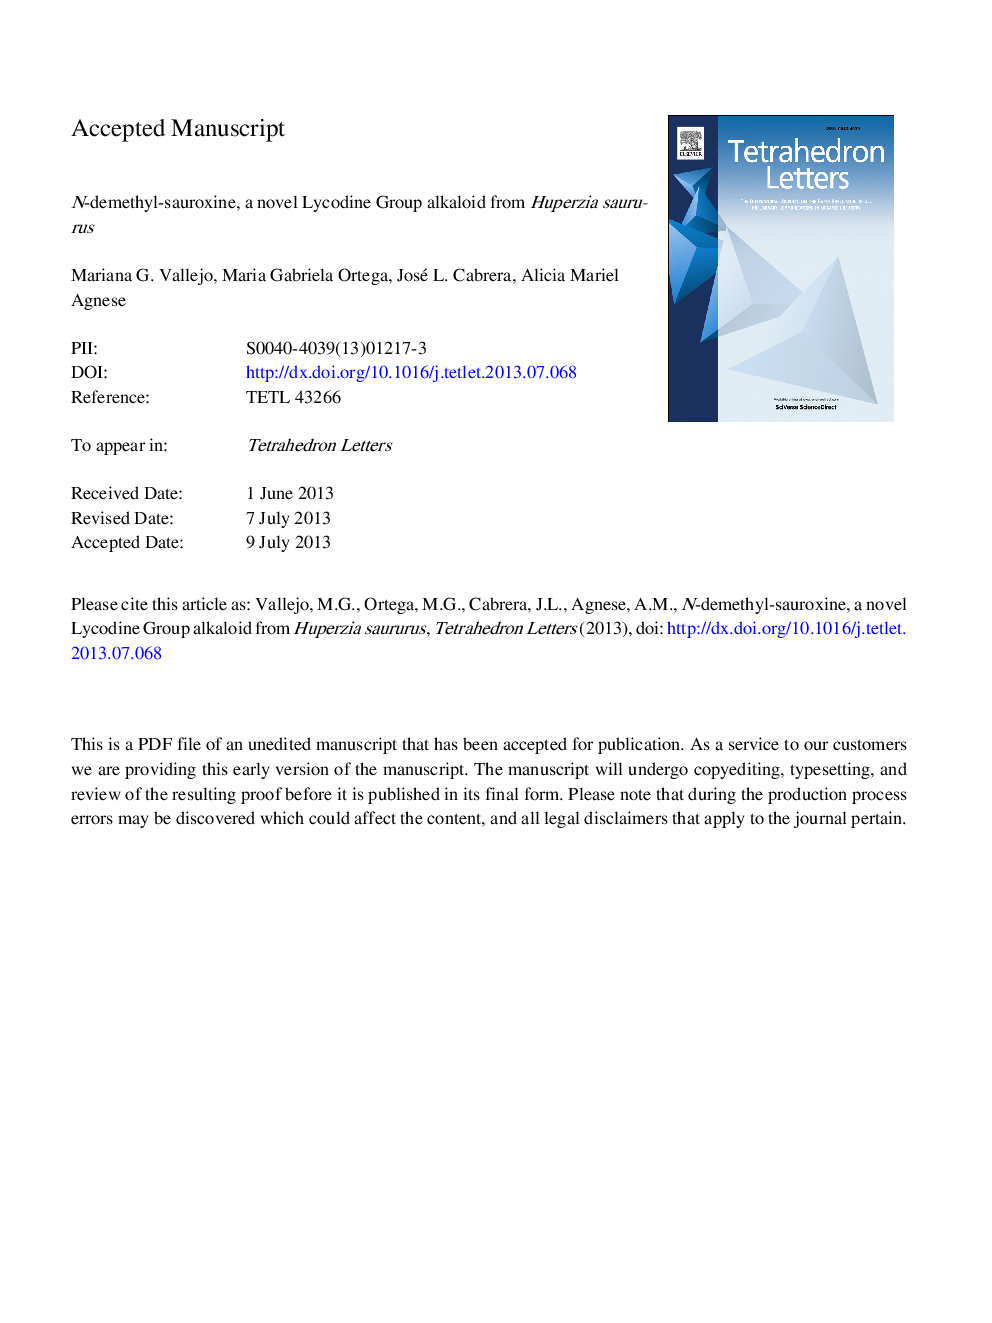 N-Demethyl-sauroxine, a novel Lycodine Group alkaloid from Huperzia saururus